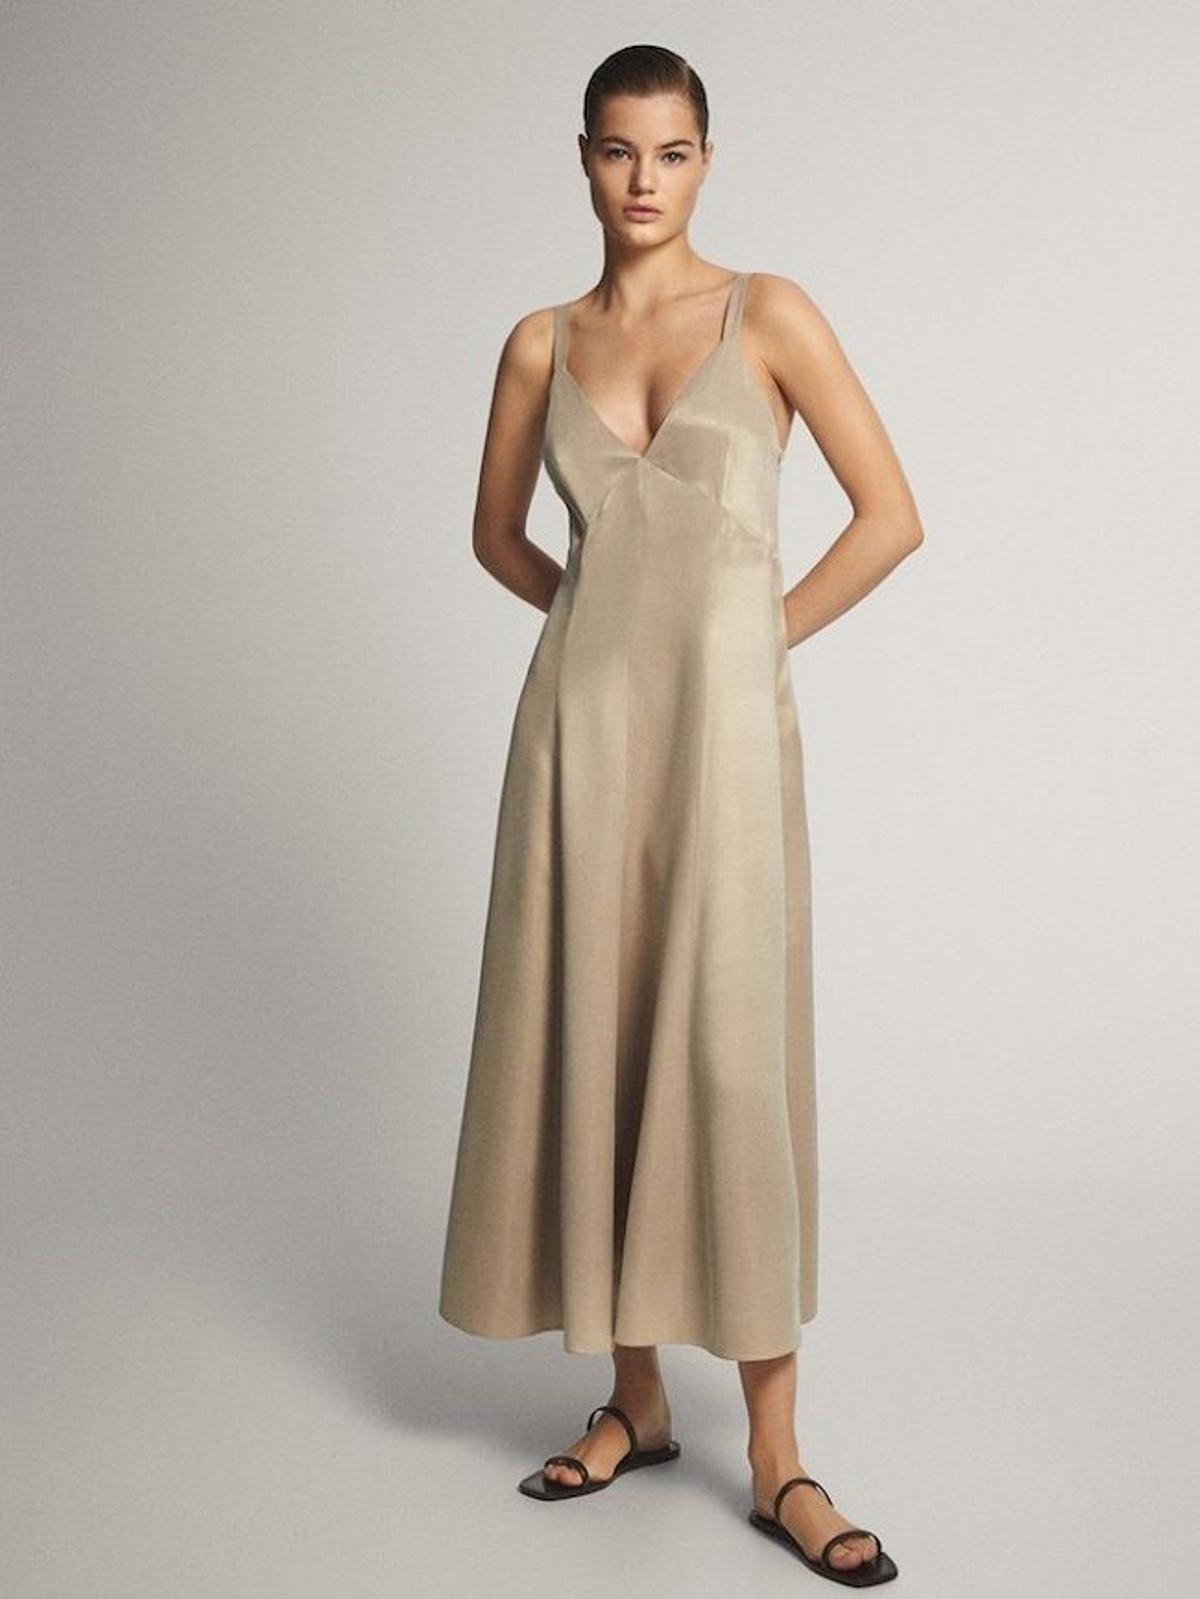 Vestido 'slip dress' de raso, de Massimo Dutti